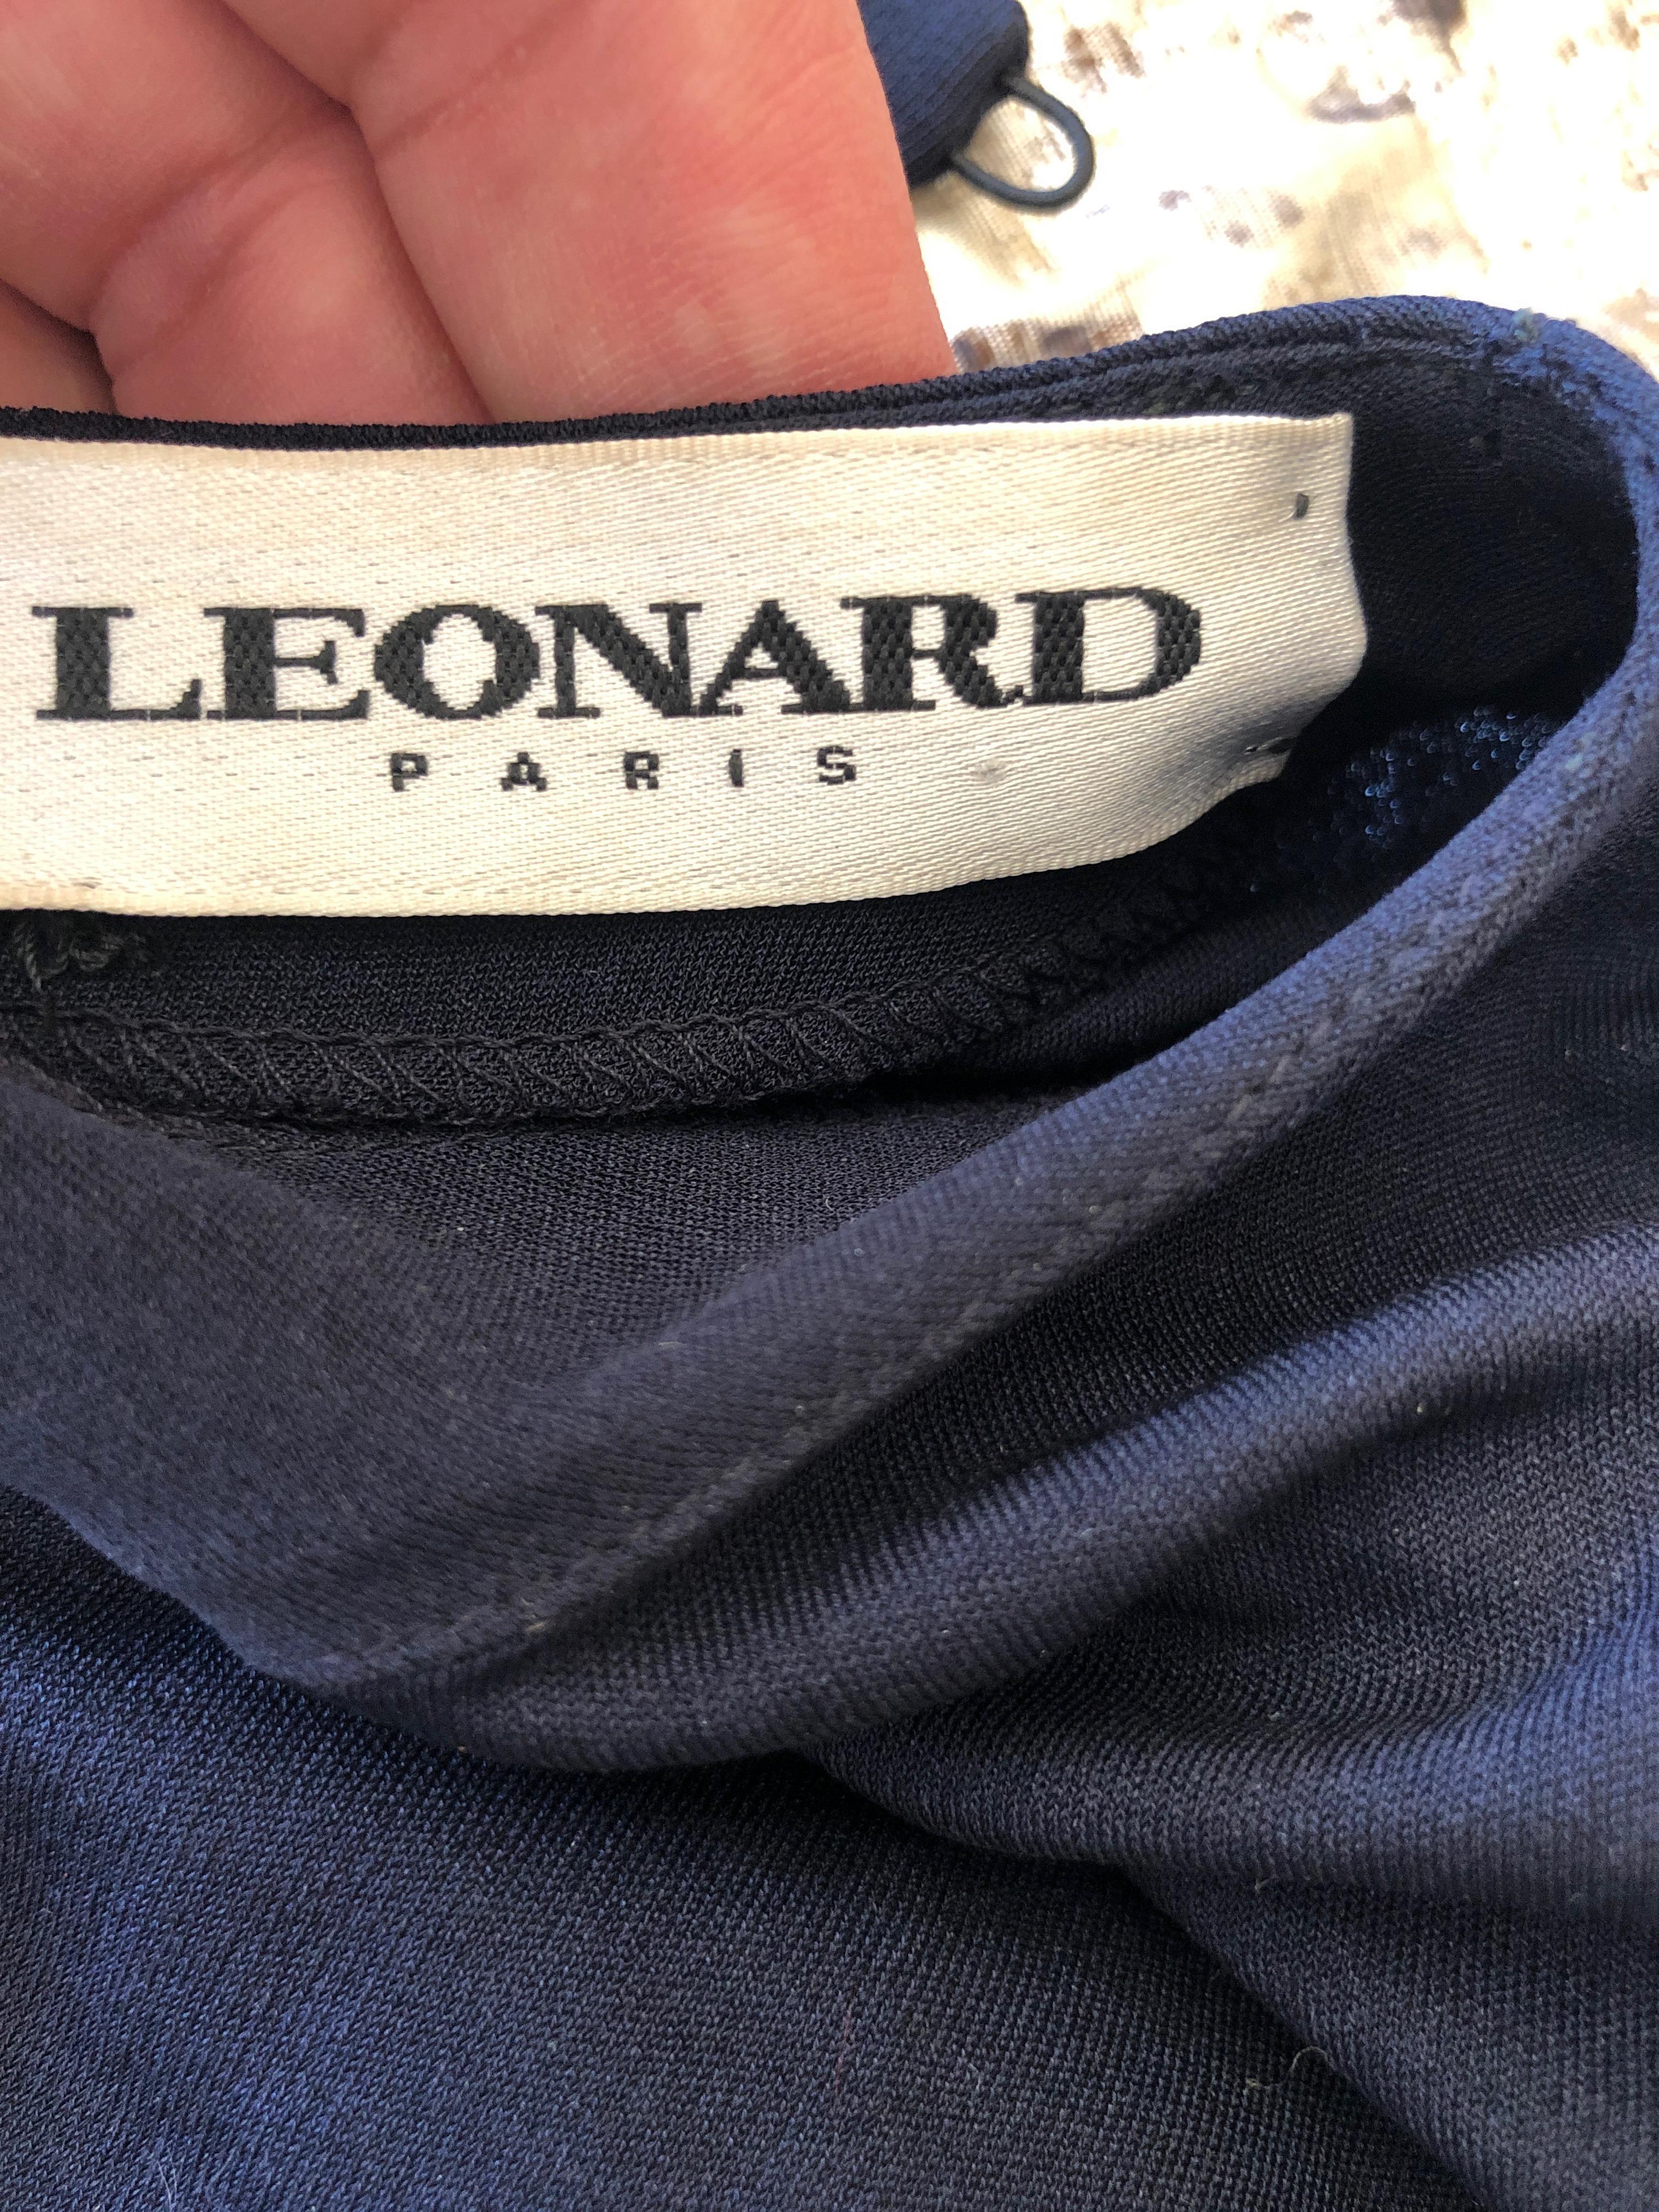 Leonard Paris Vintage Silk Jersey Sleeveless Dress with Suede Fringe Details For Sale 2